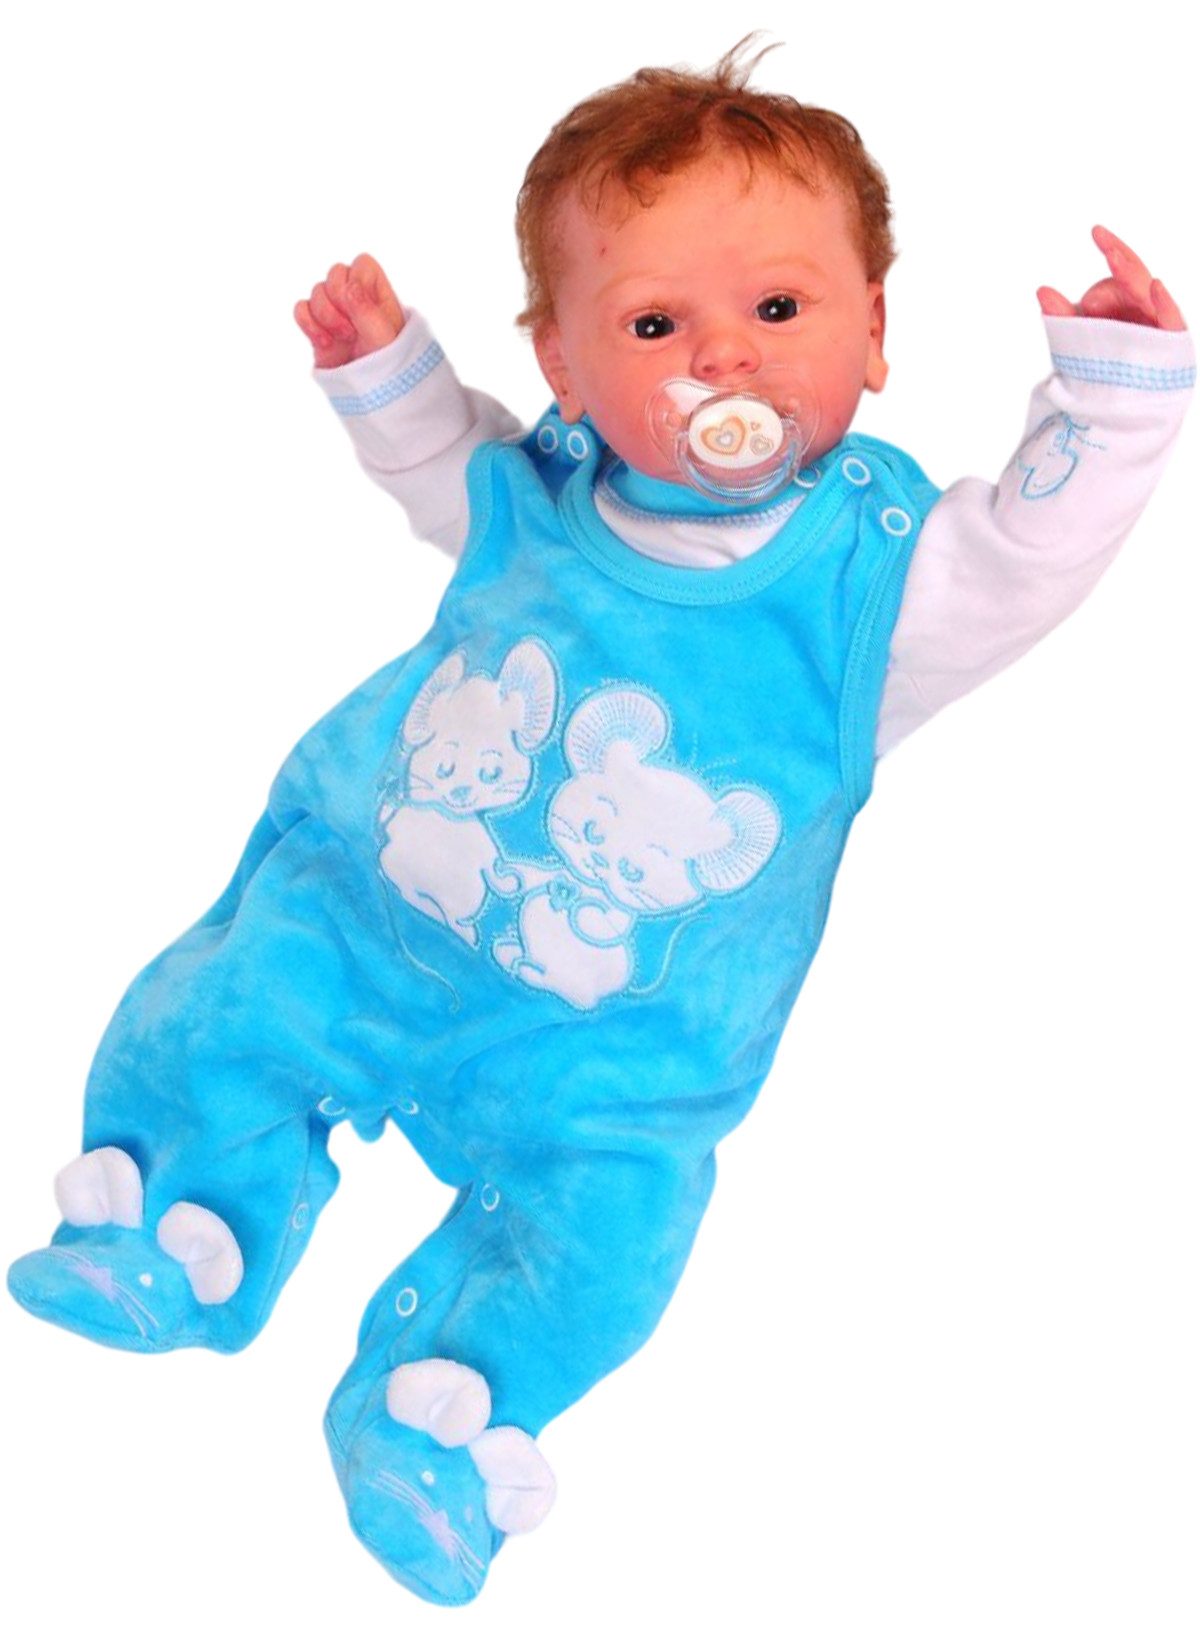 La Bortini Strampler Strampler und Shirt Baby Anzug 44 50 56 62 68 74